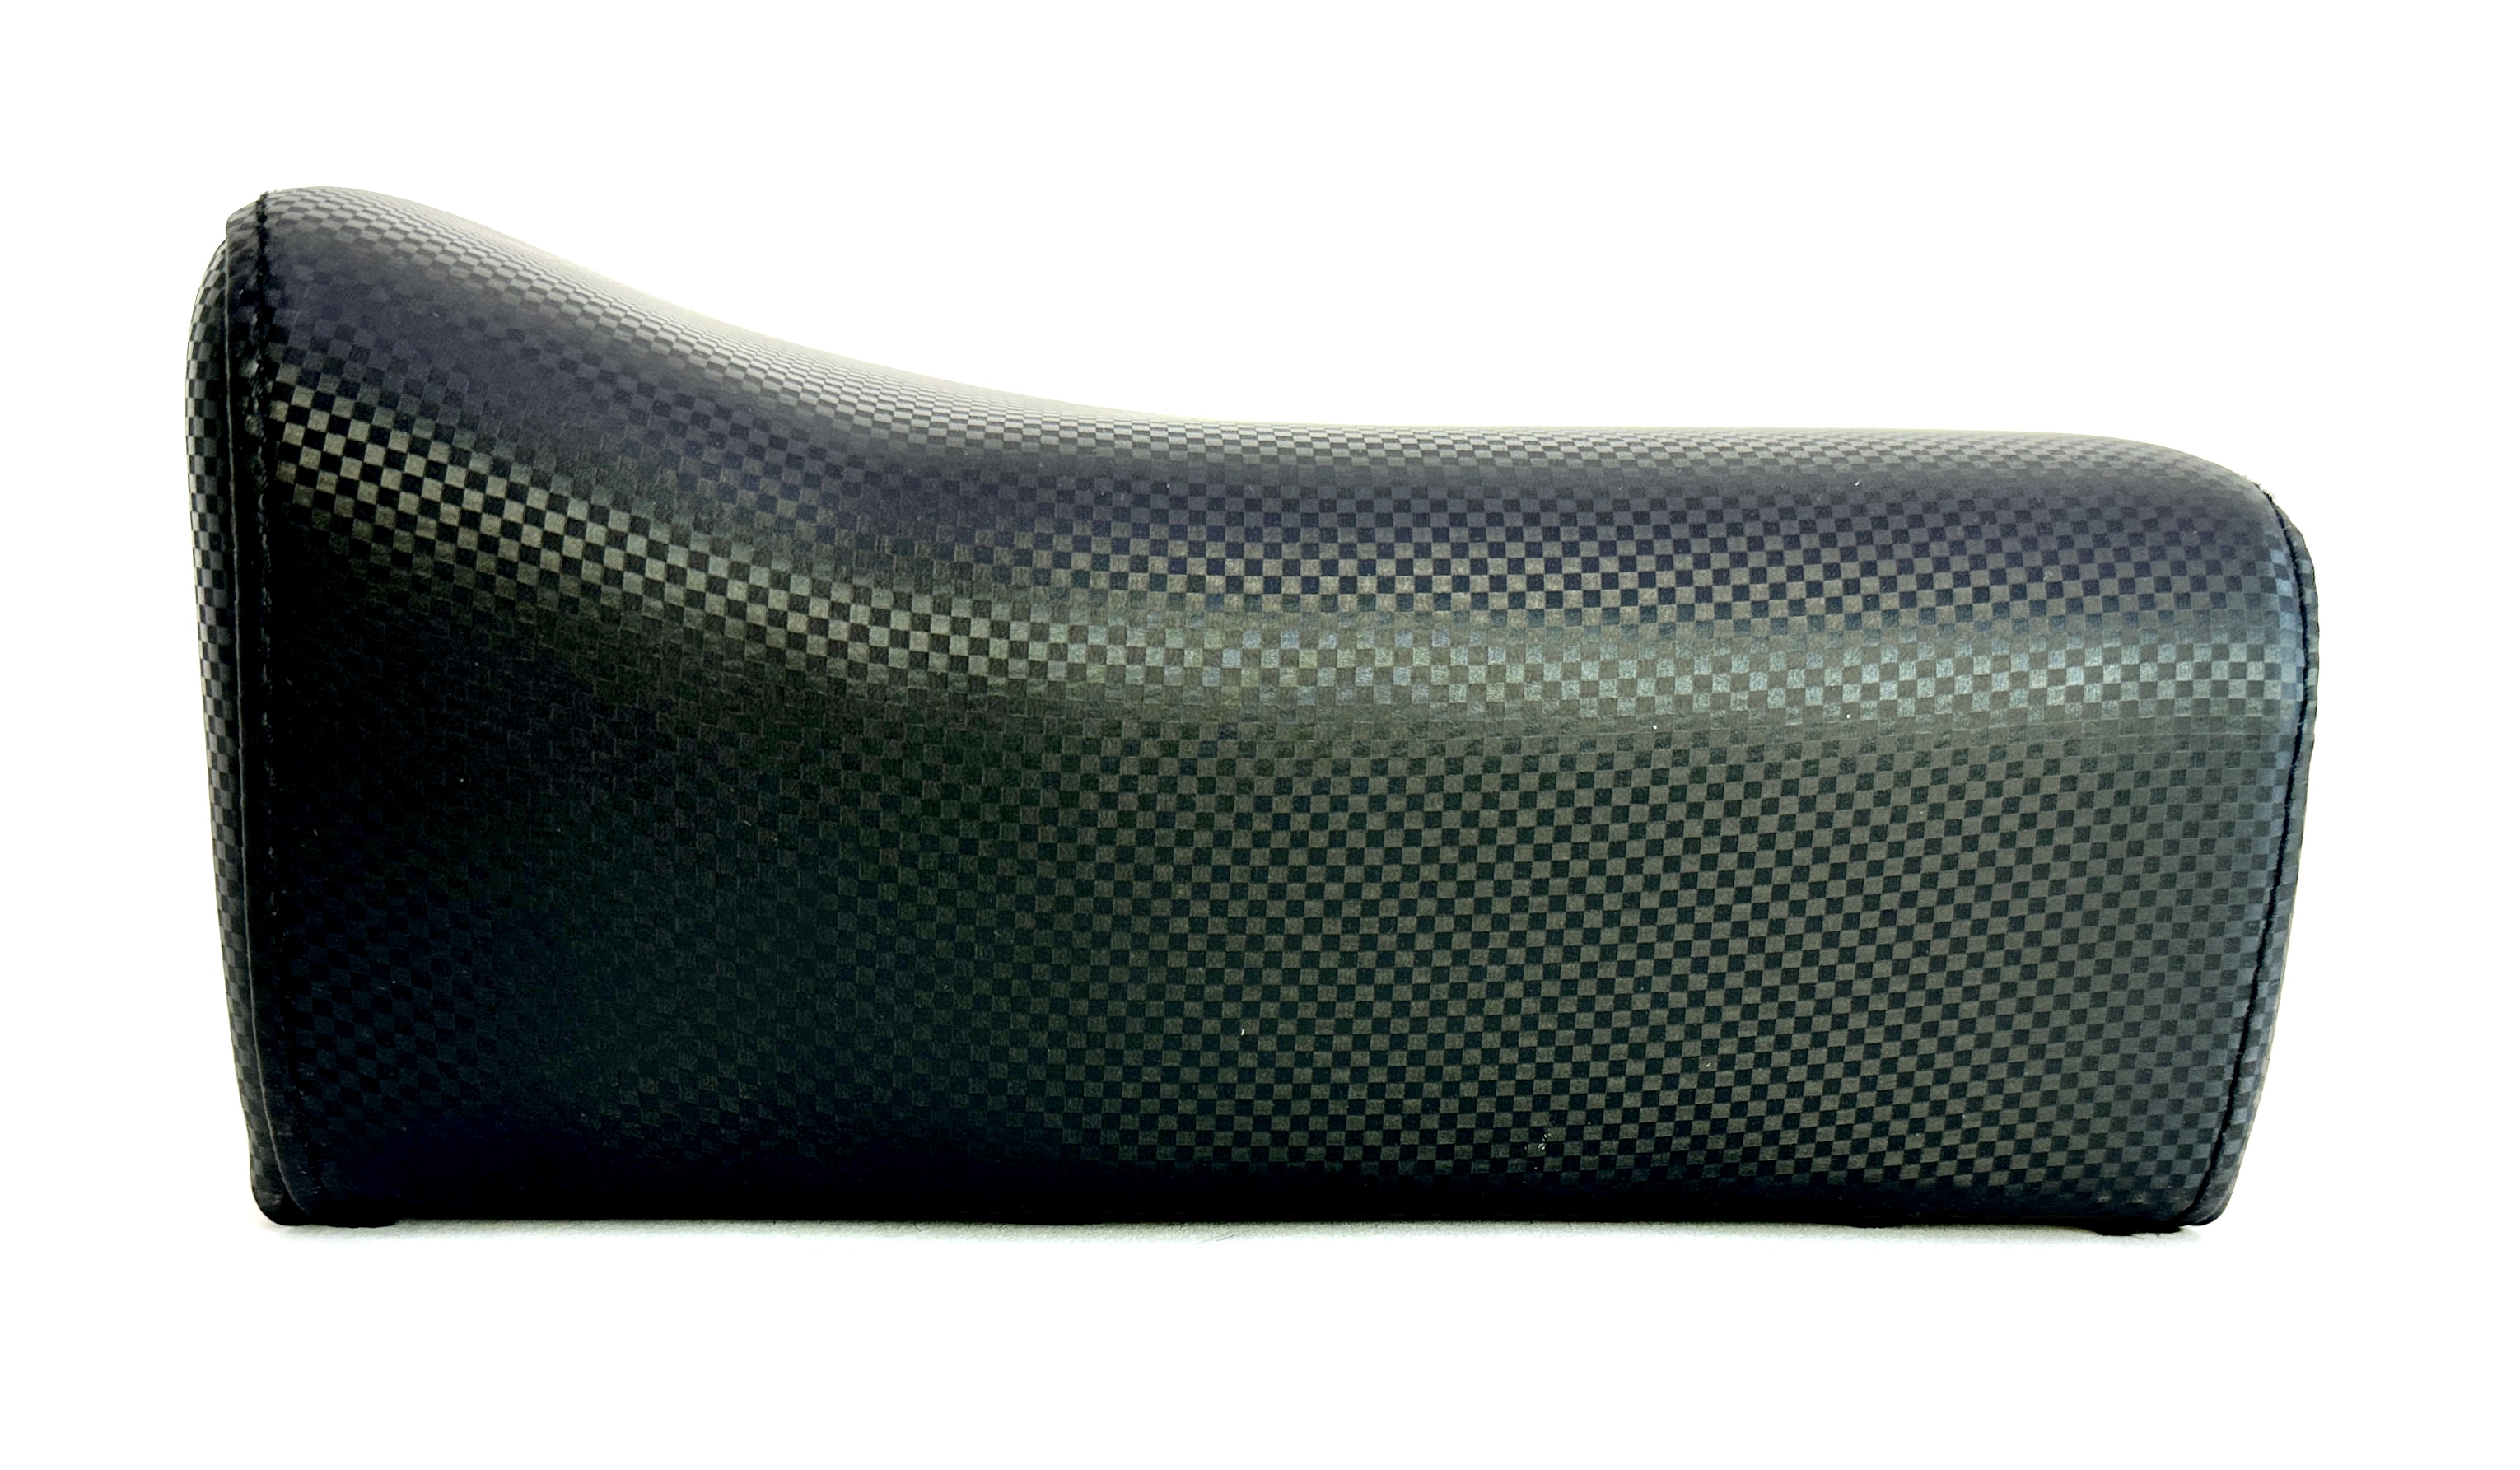 Seat extension / pillion seat / seat cushion for UNI MK, carbon